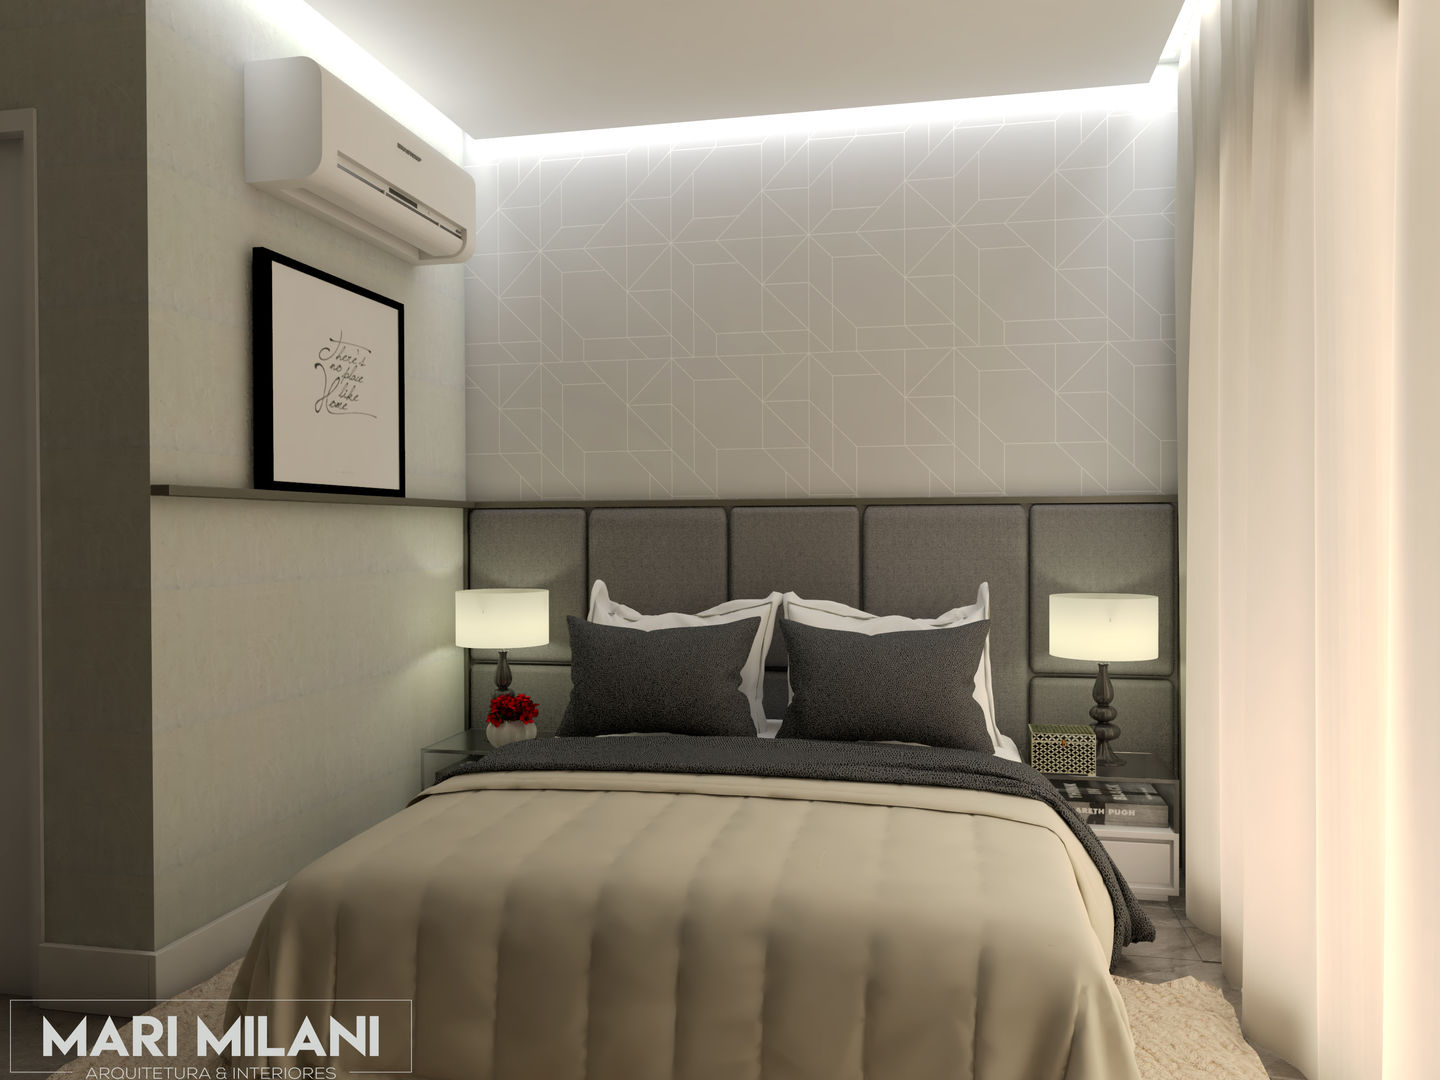 Apartamento Santana, Mari Milani Arquitetura & Interiores Mari Milani Arquitetura & Interiores Small bedroom